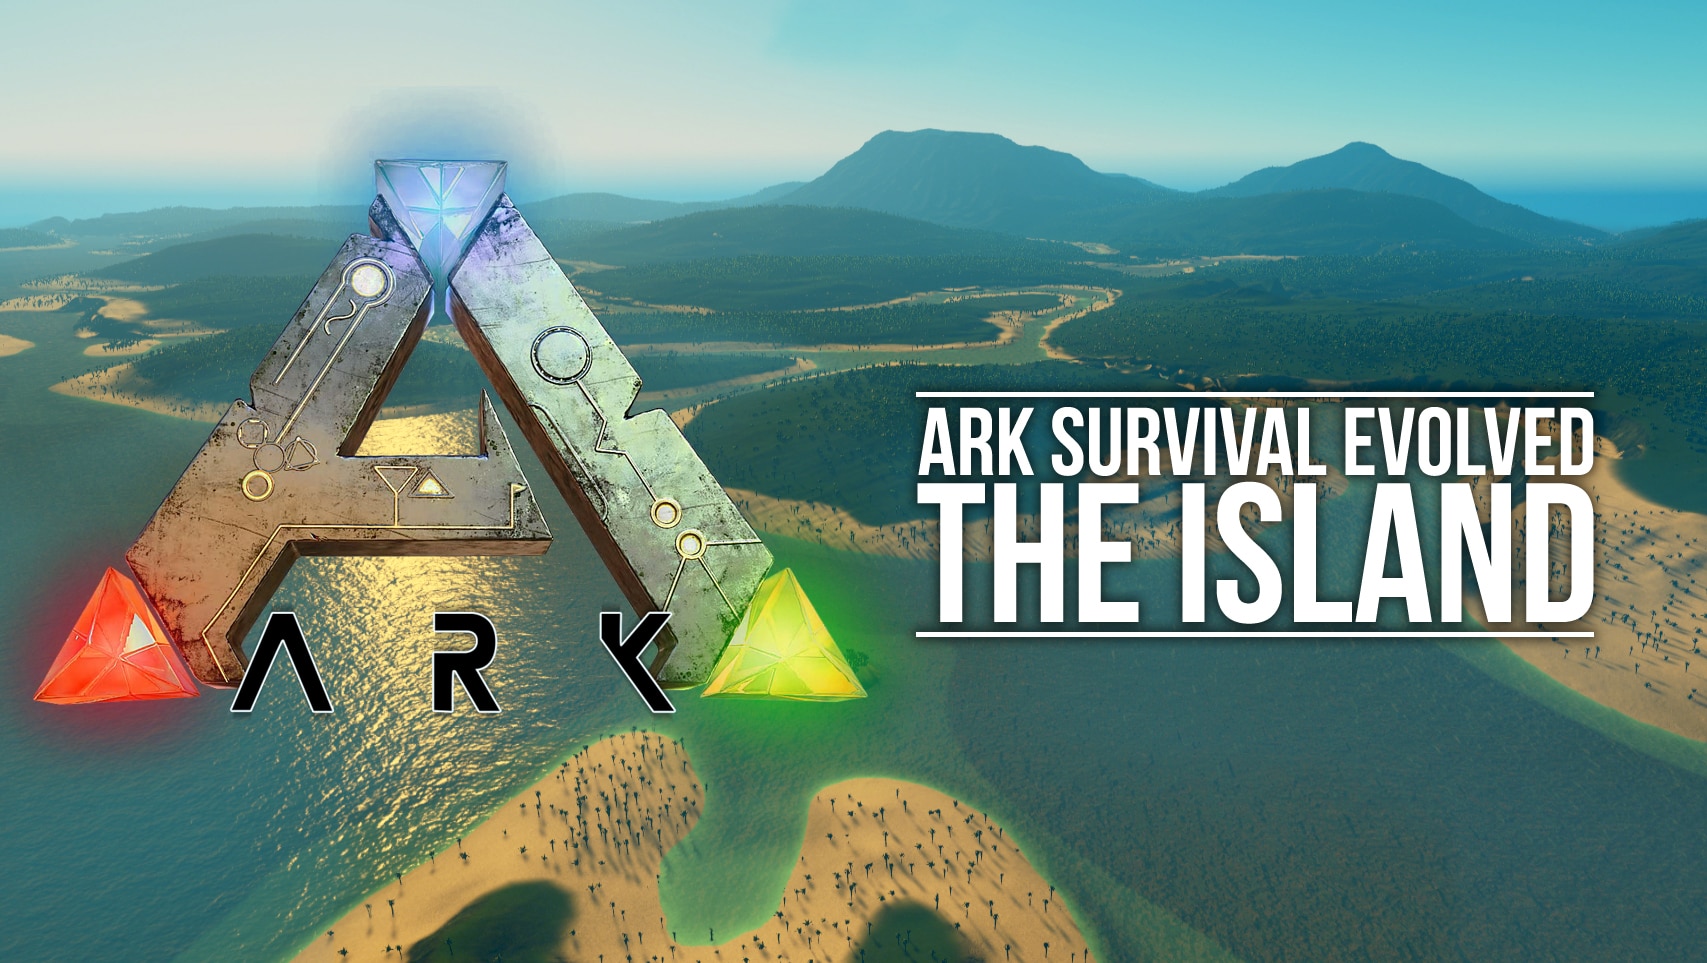 Lets island. АРК the Island Map. Карта the Island в АРК. Карта Исланда АРК. Ark Survival Evolved карта the Island.